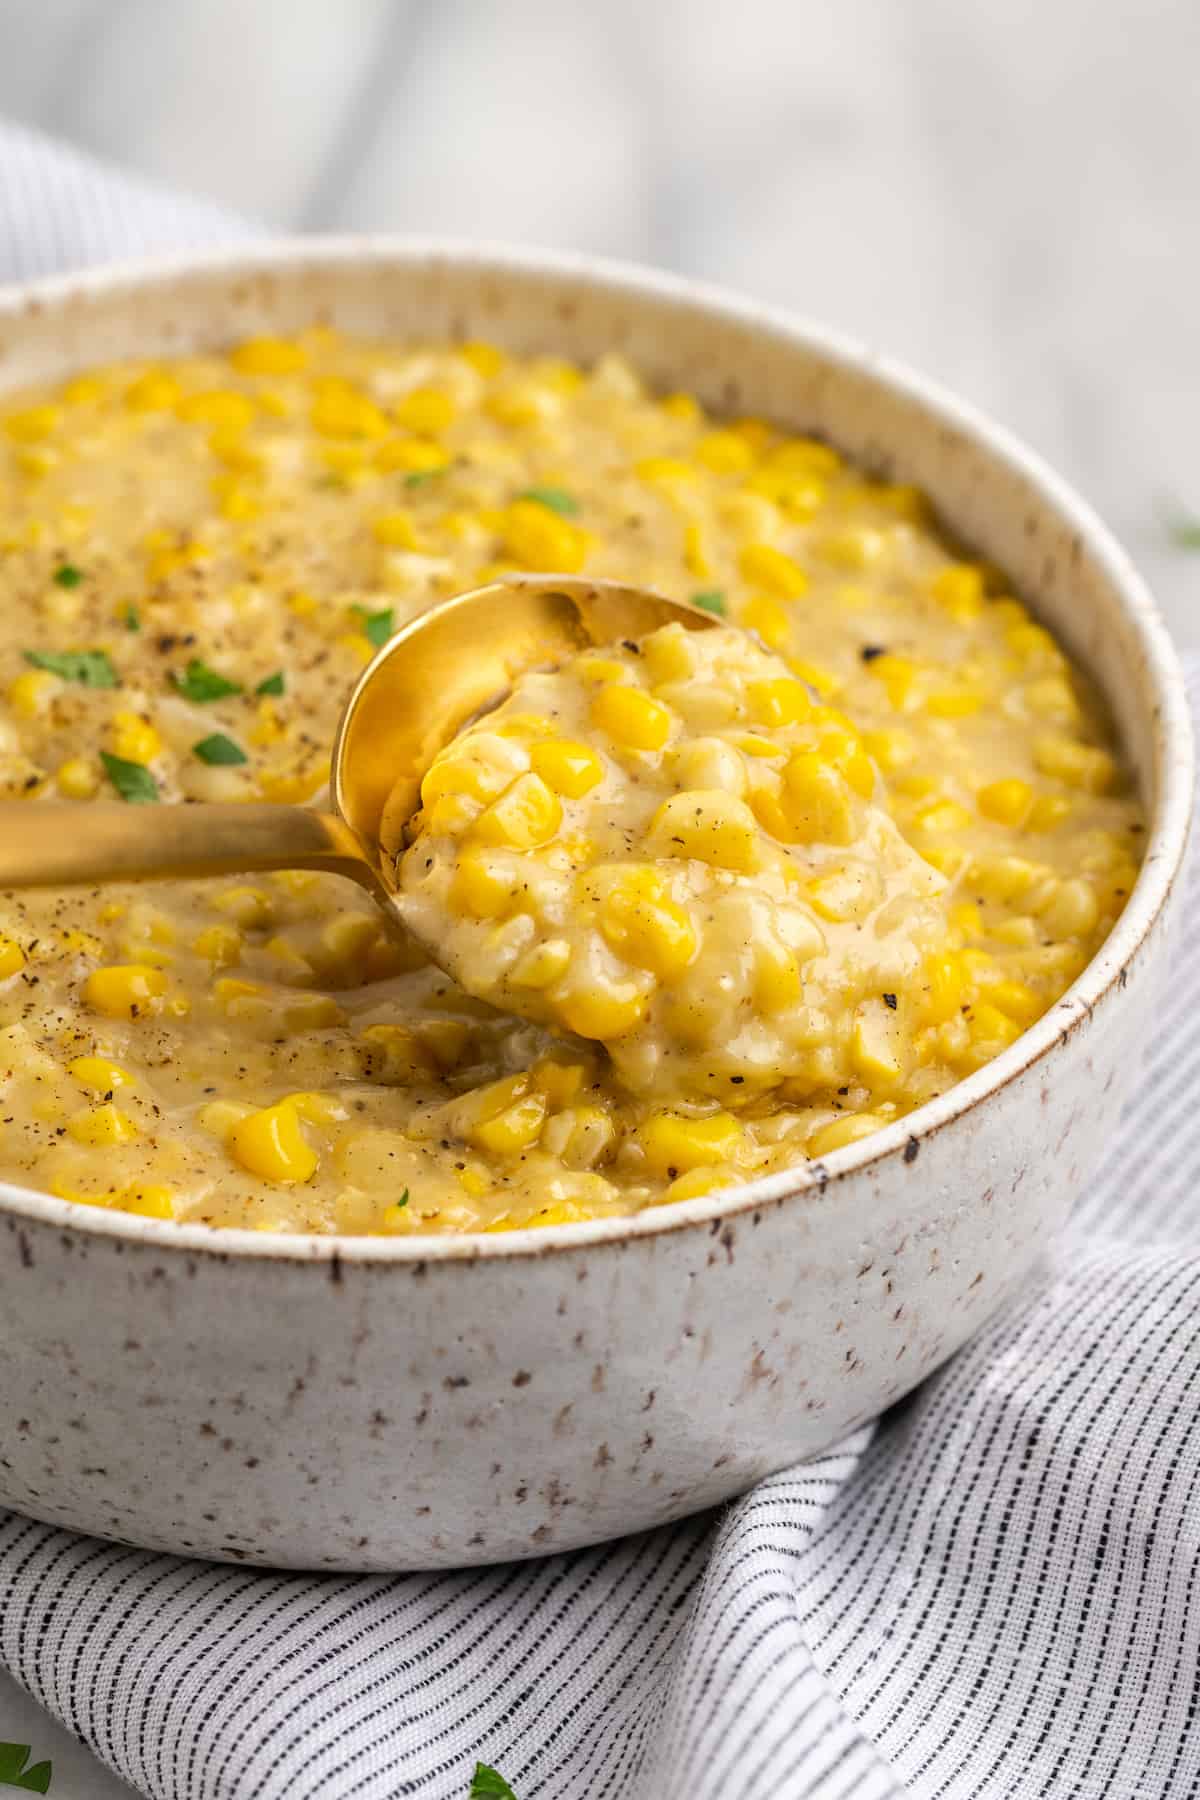 Spoon lifting vegan creamed corn from bowl